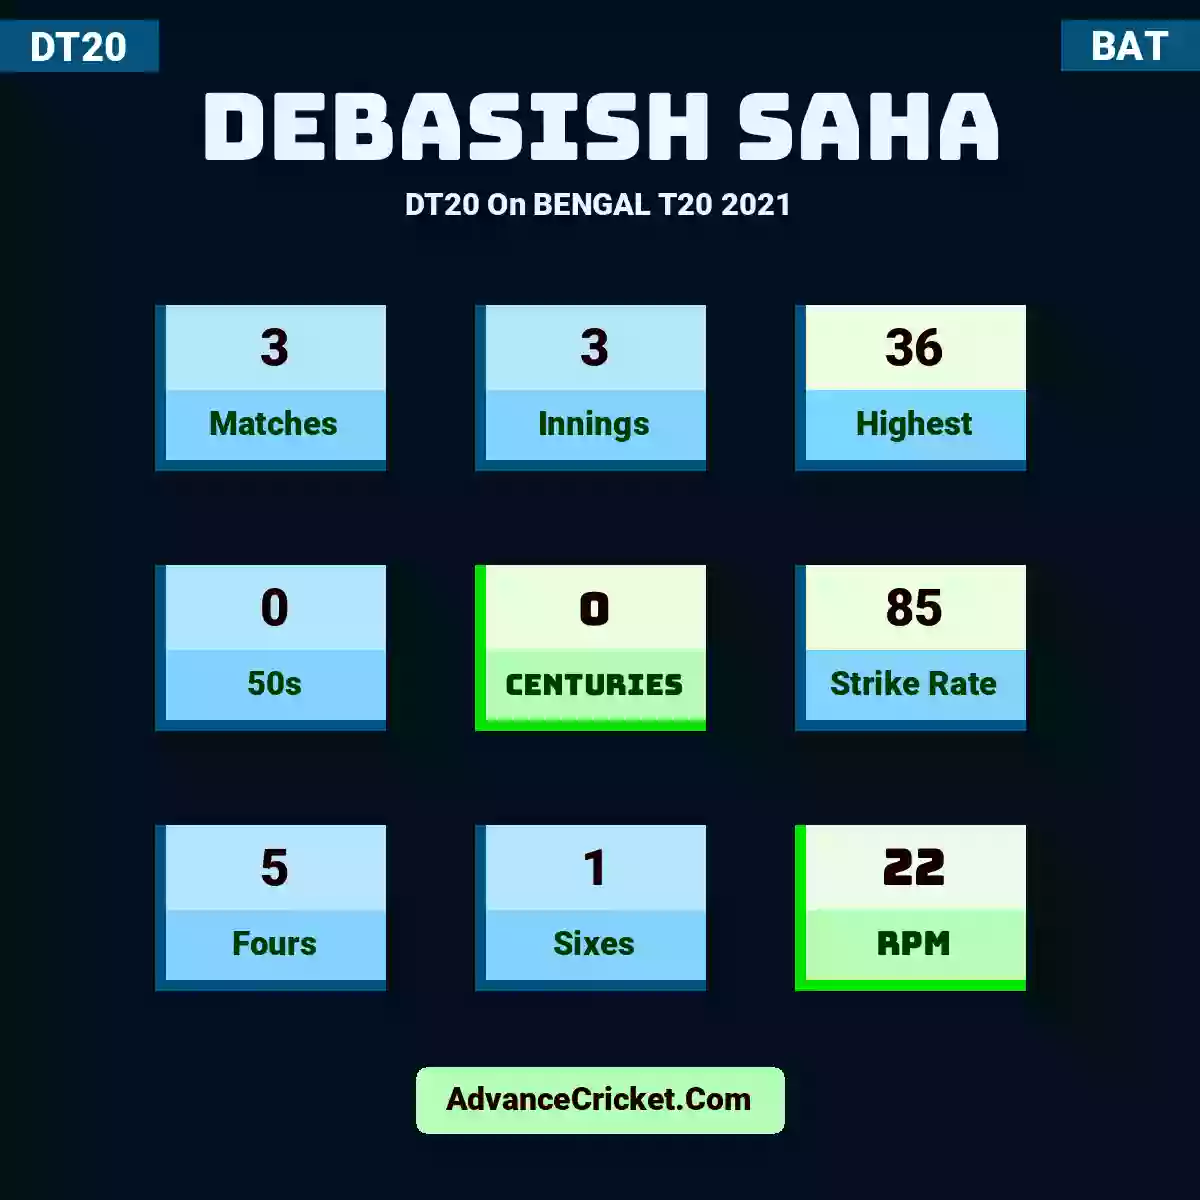 Debasish Saha DT20  On BENGAL T20 2021, Debasish Saha played 3 matches, scored 36 runs as highest, 0 half-centuries, and 0 centuries, with a strike rate of 85. D.Saha hit 5 fours and 1 sixes, with an RPM of 22.